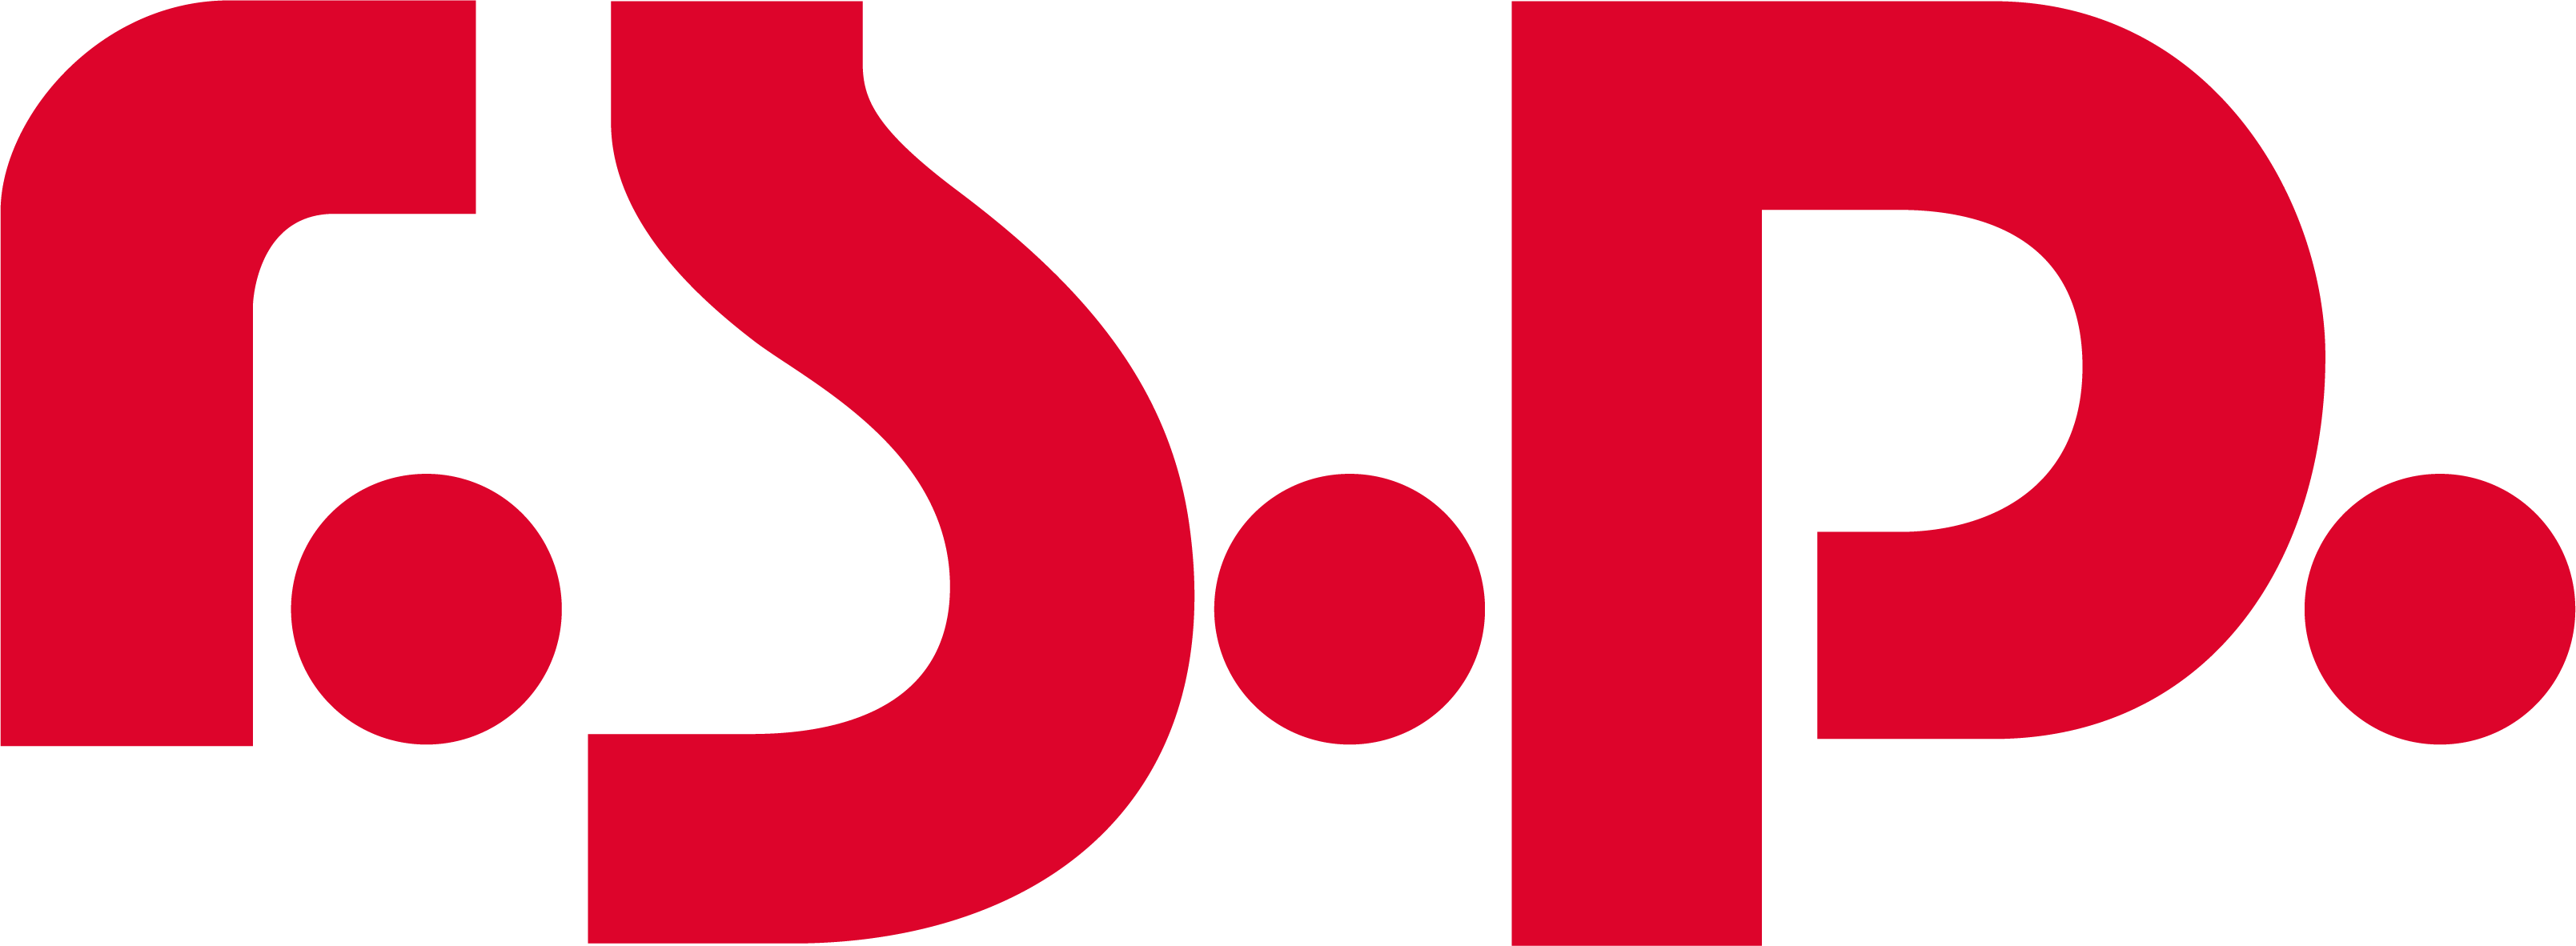 RSP_logo_186C (1)